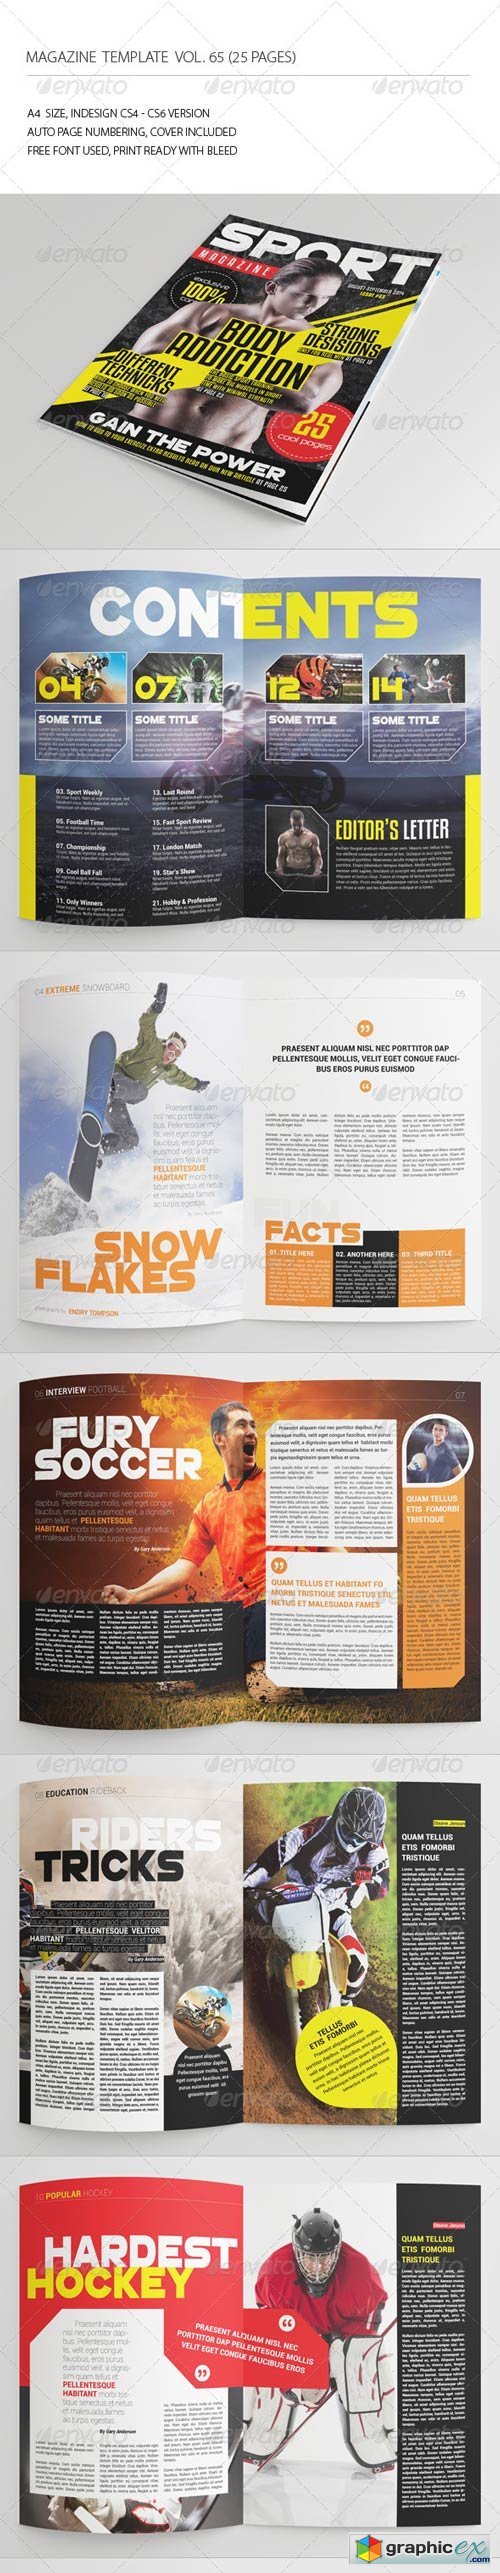 25 Pages Sport Magazine Vol65